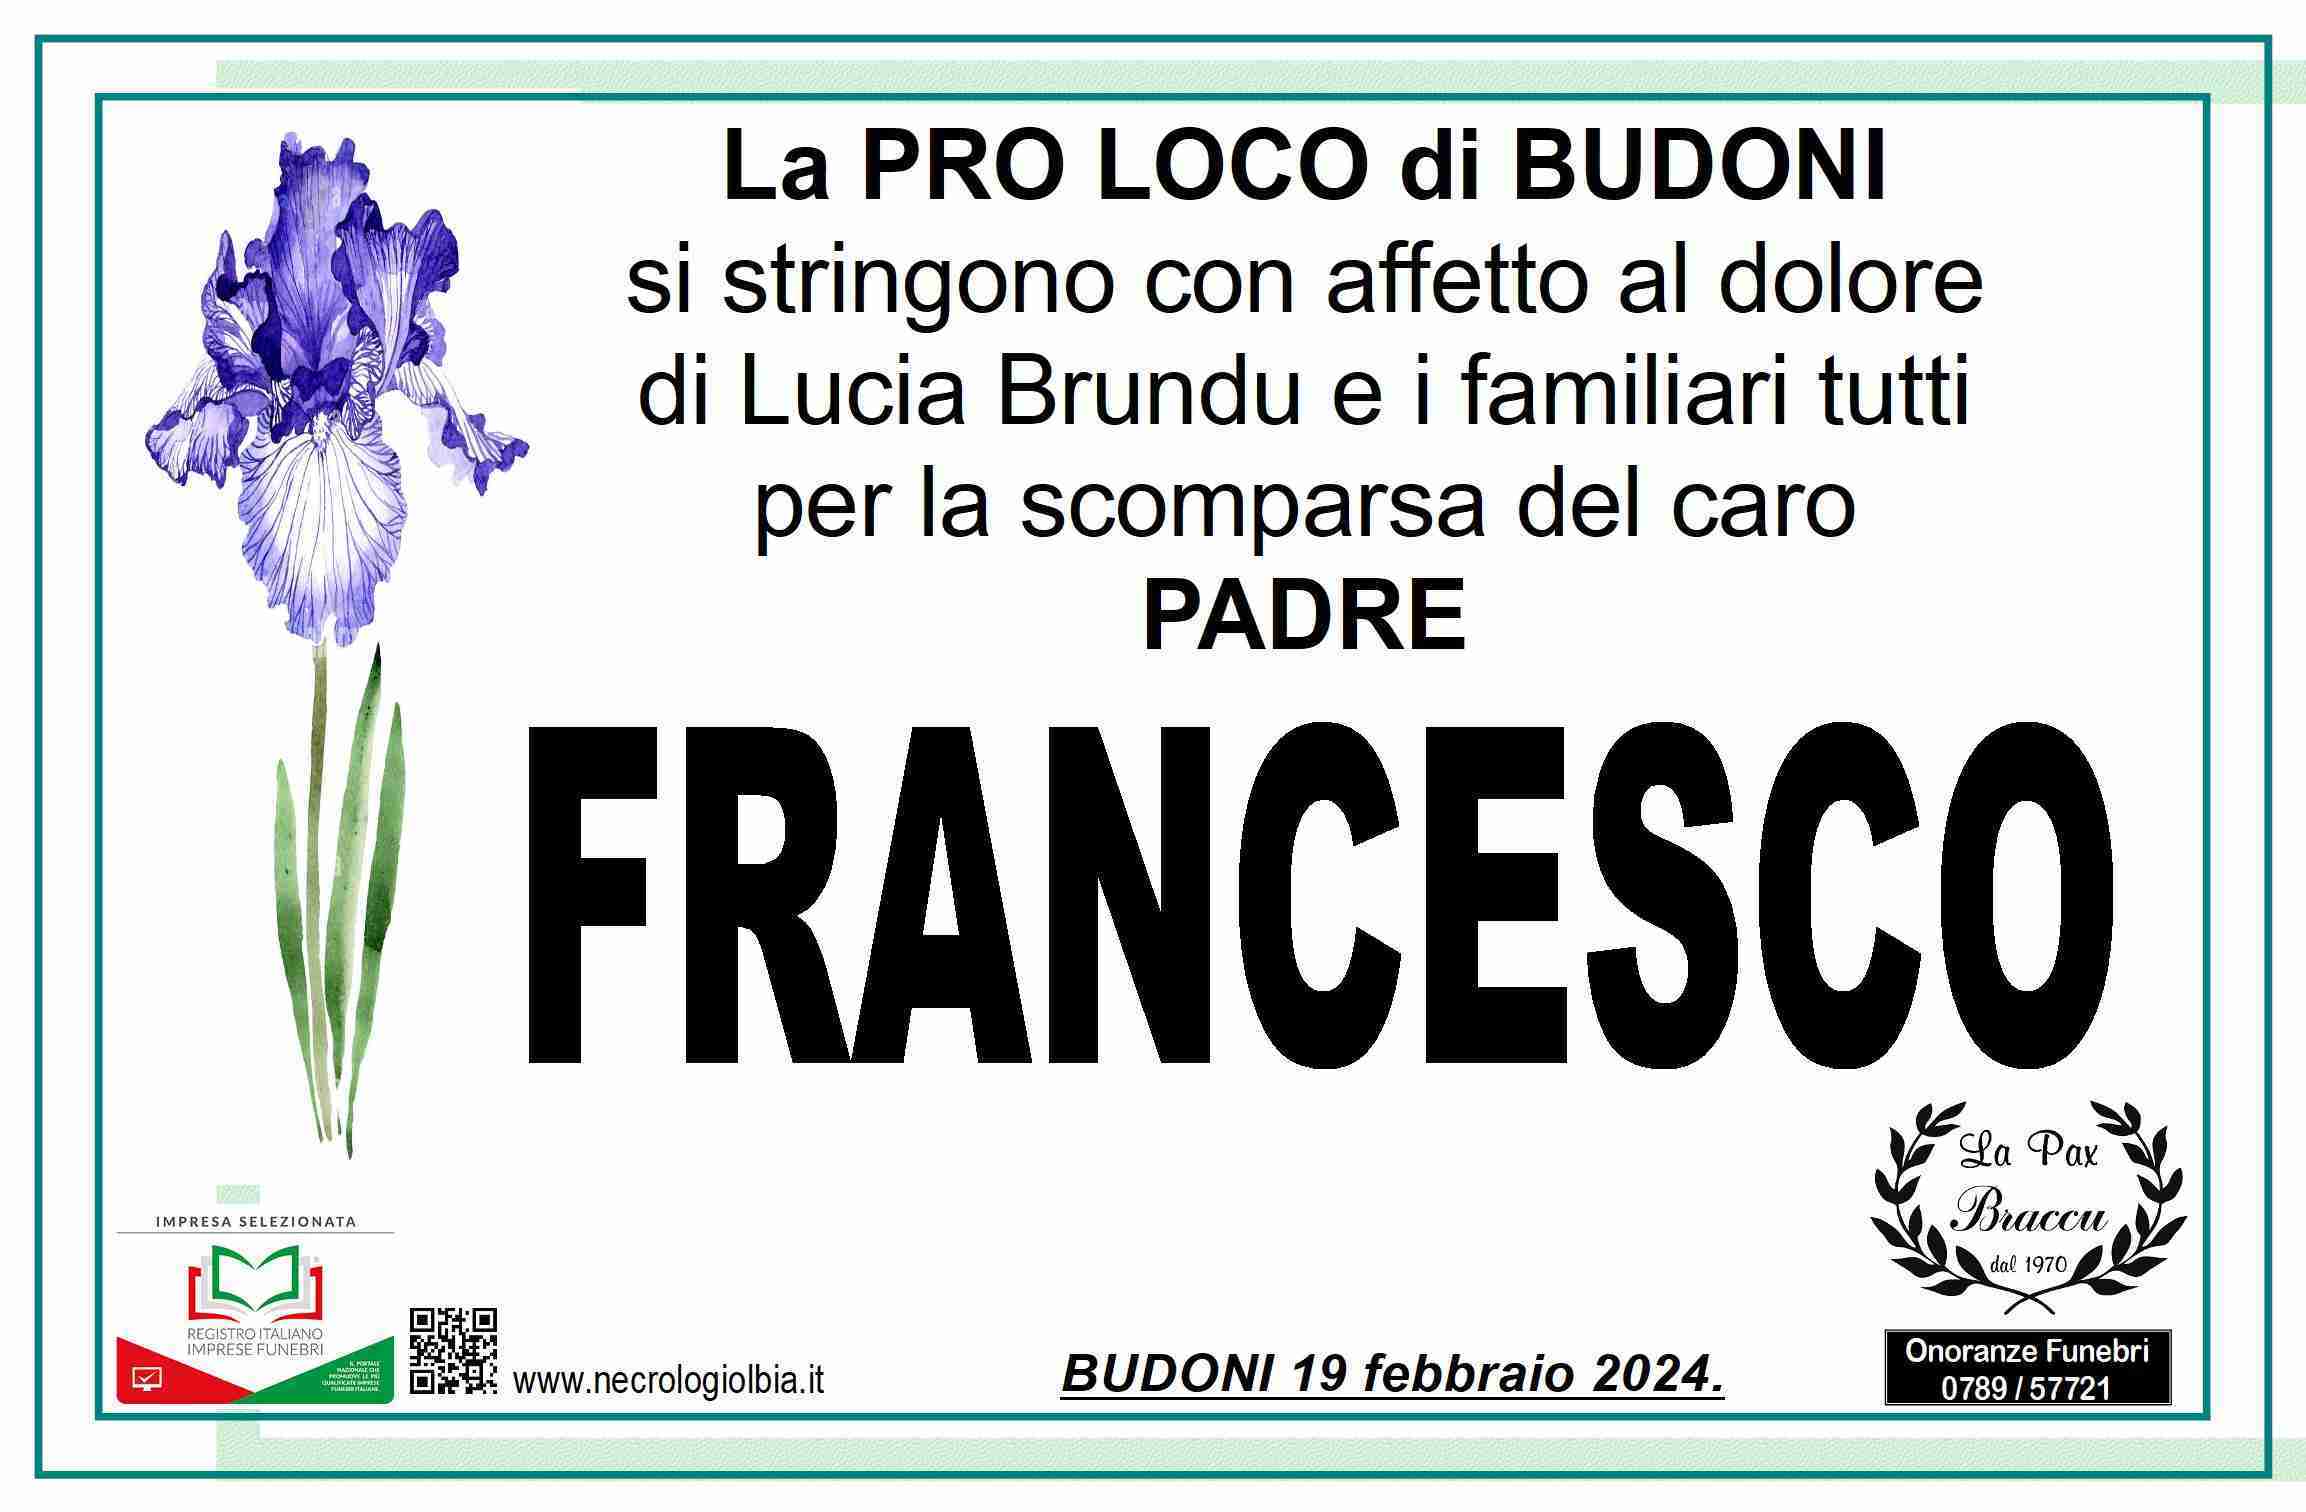 Francesco Brundu